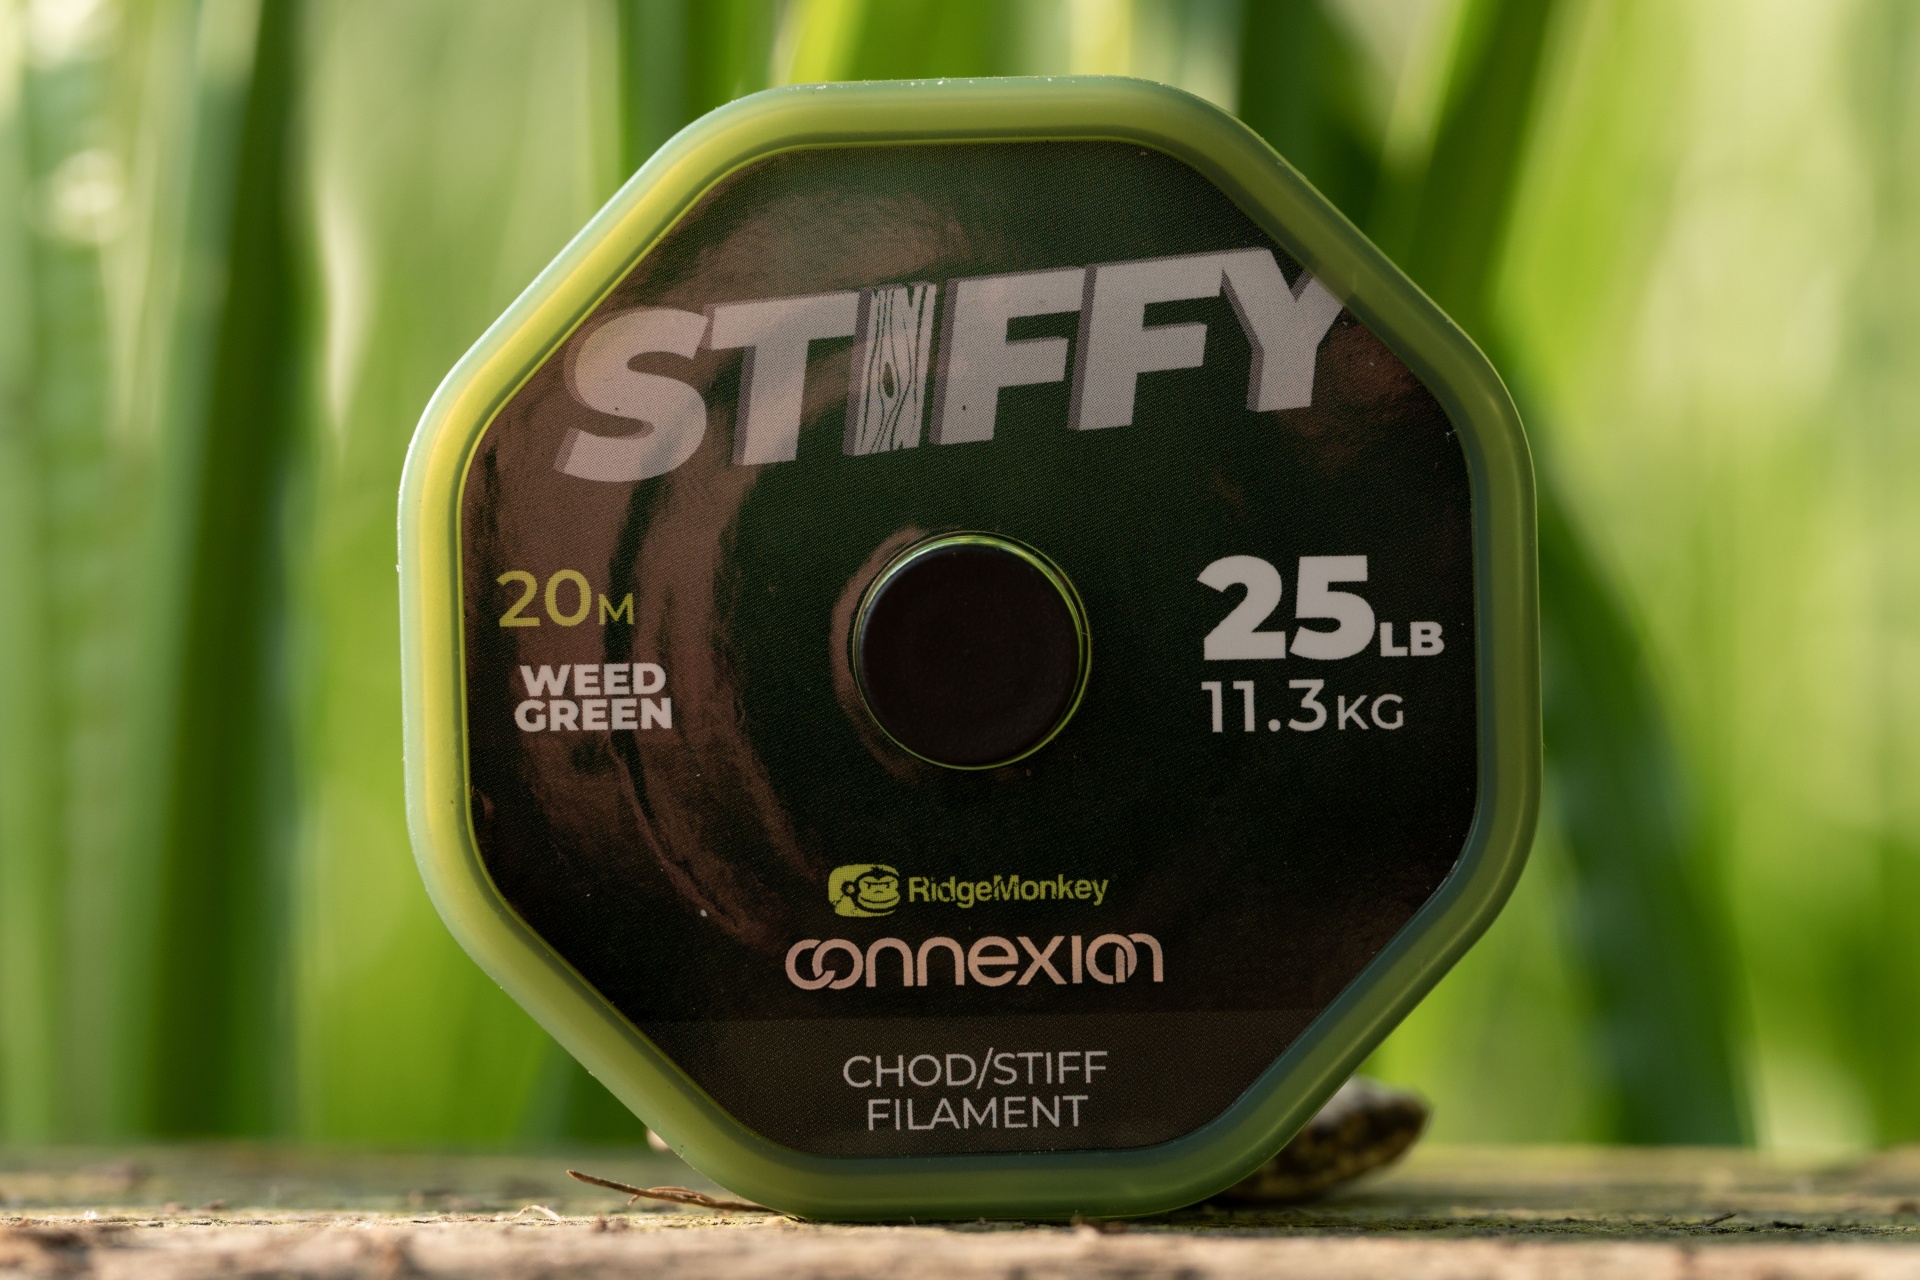 RidgeMonkey Connexion Stiffy Chod/Stiff Filament 